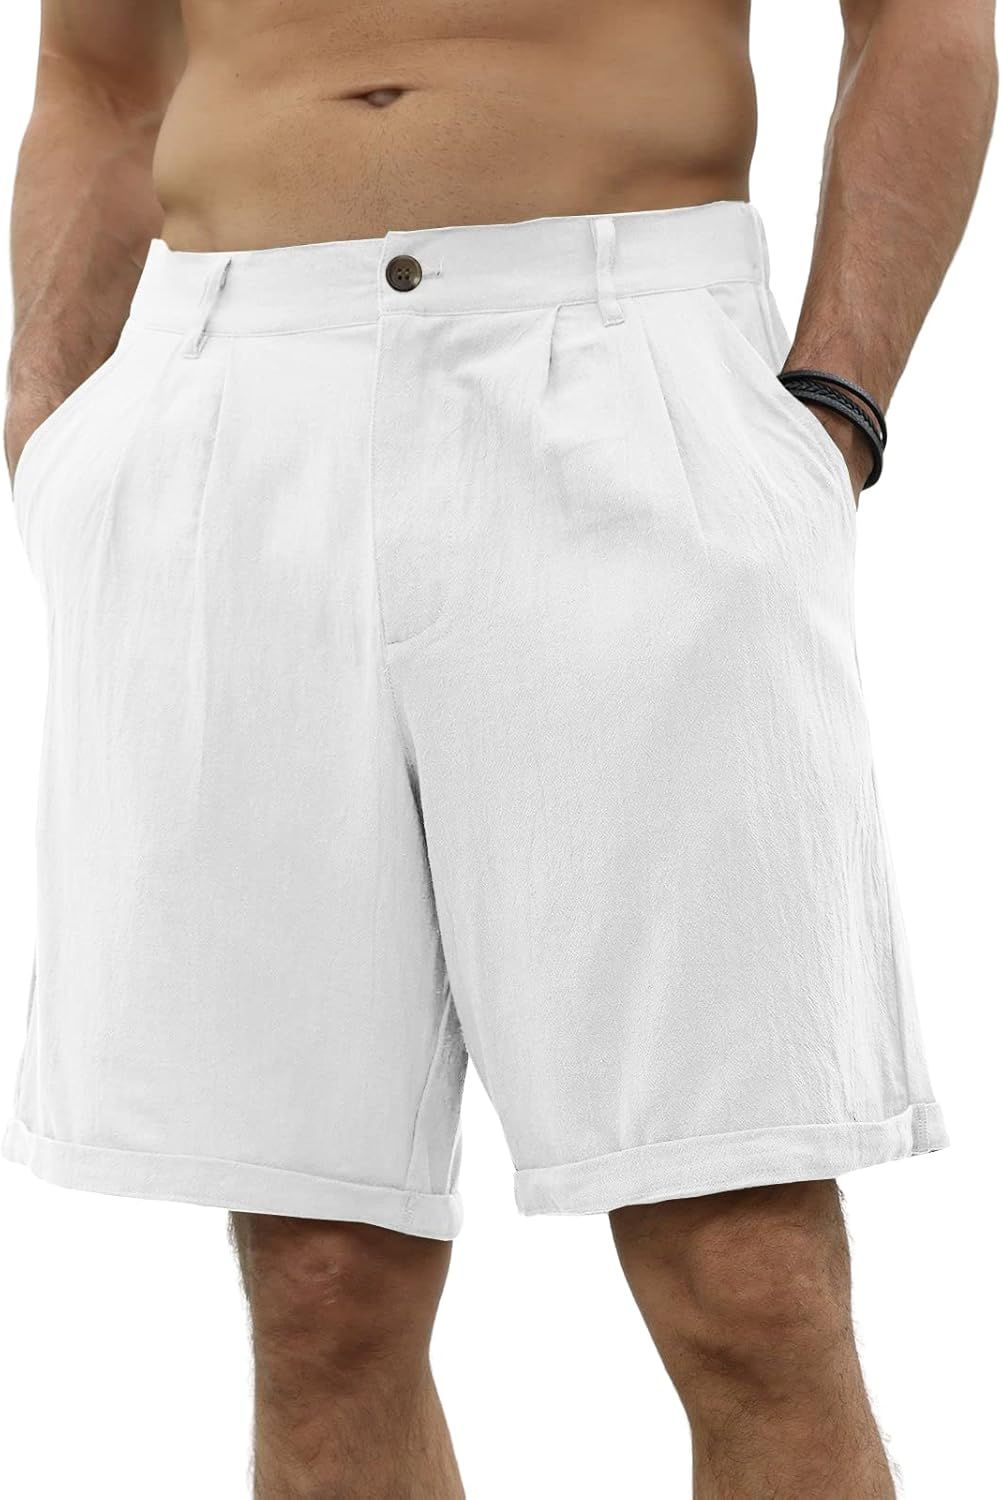 Men's Linen Casual Beach Shorts Cotton Classic Summer Shorts with Buttons Elastic Waist | Amazon (US)